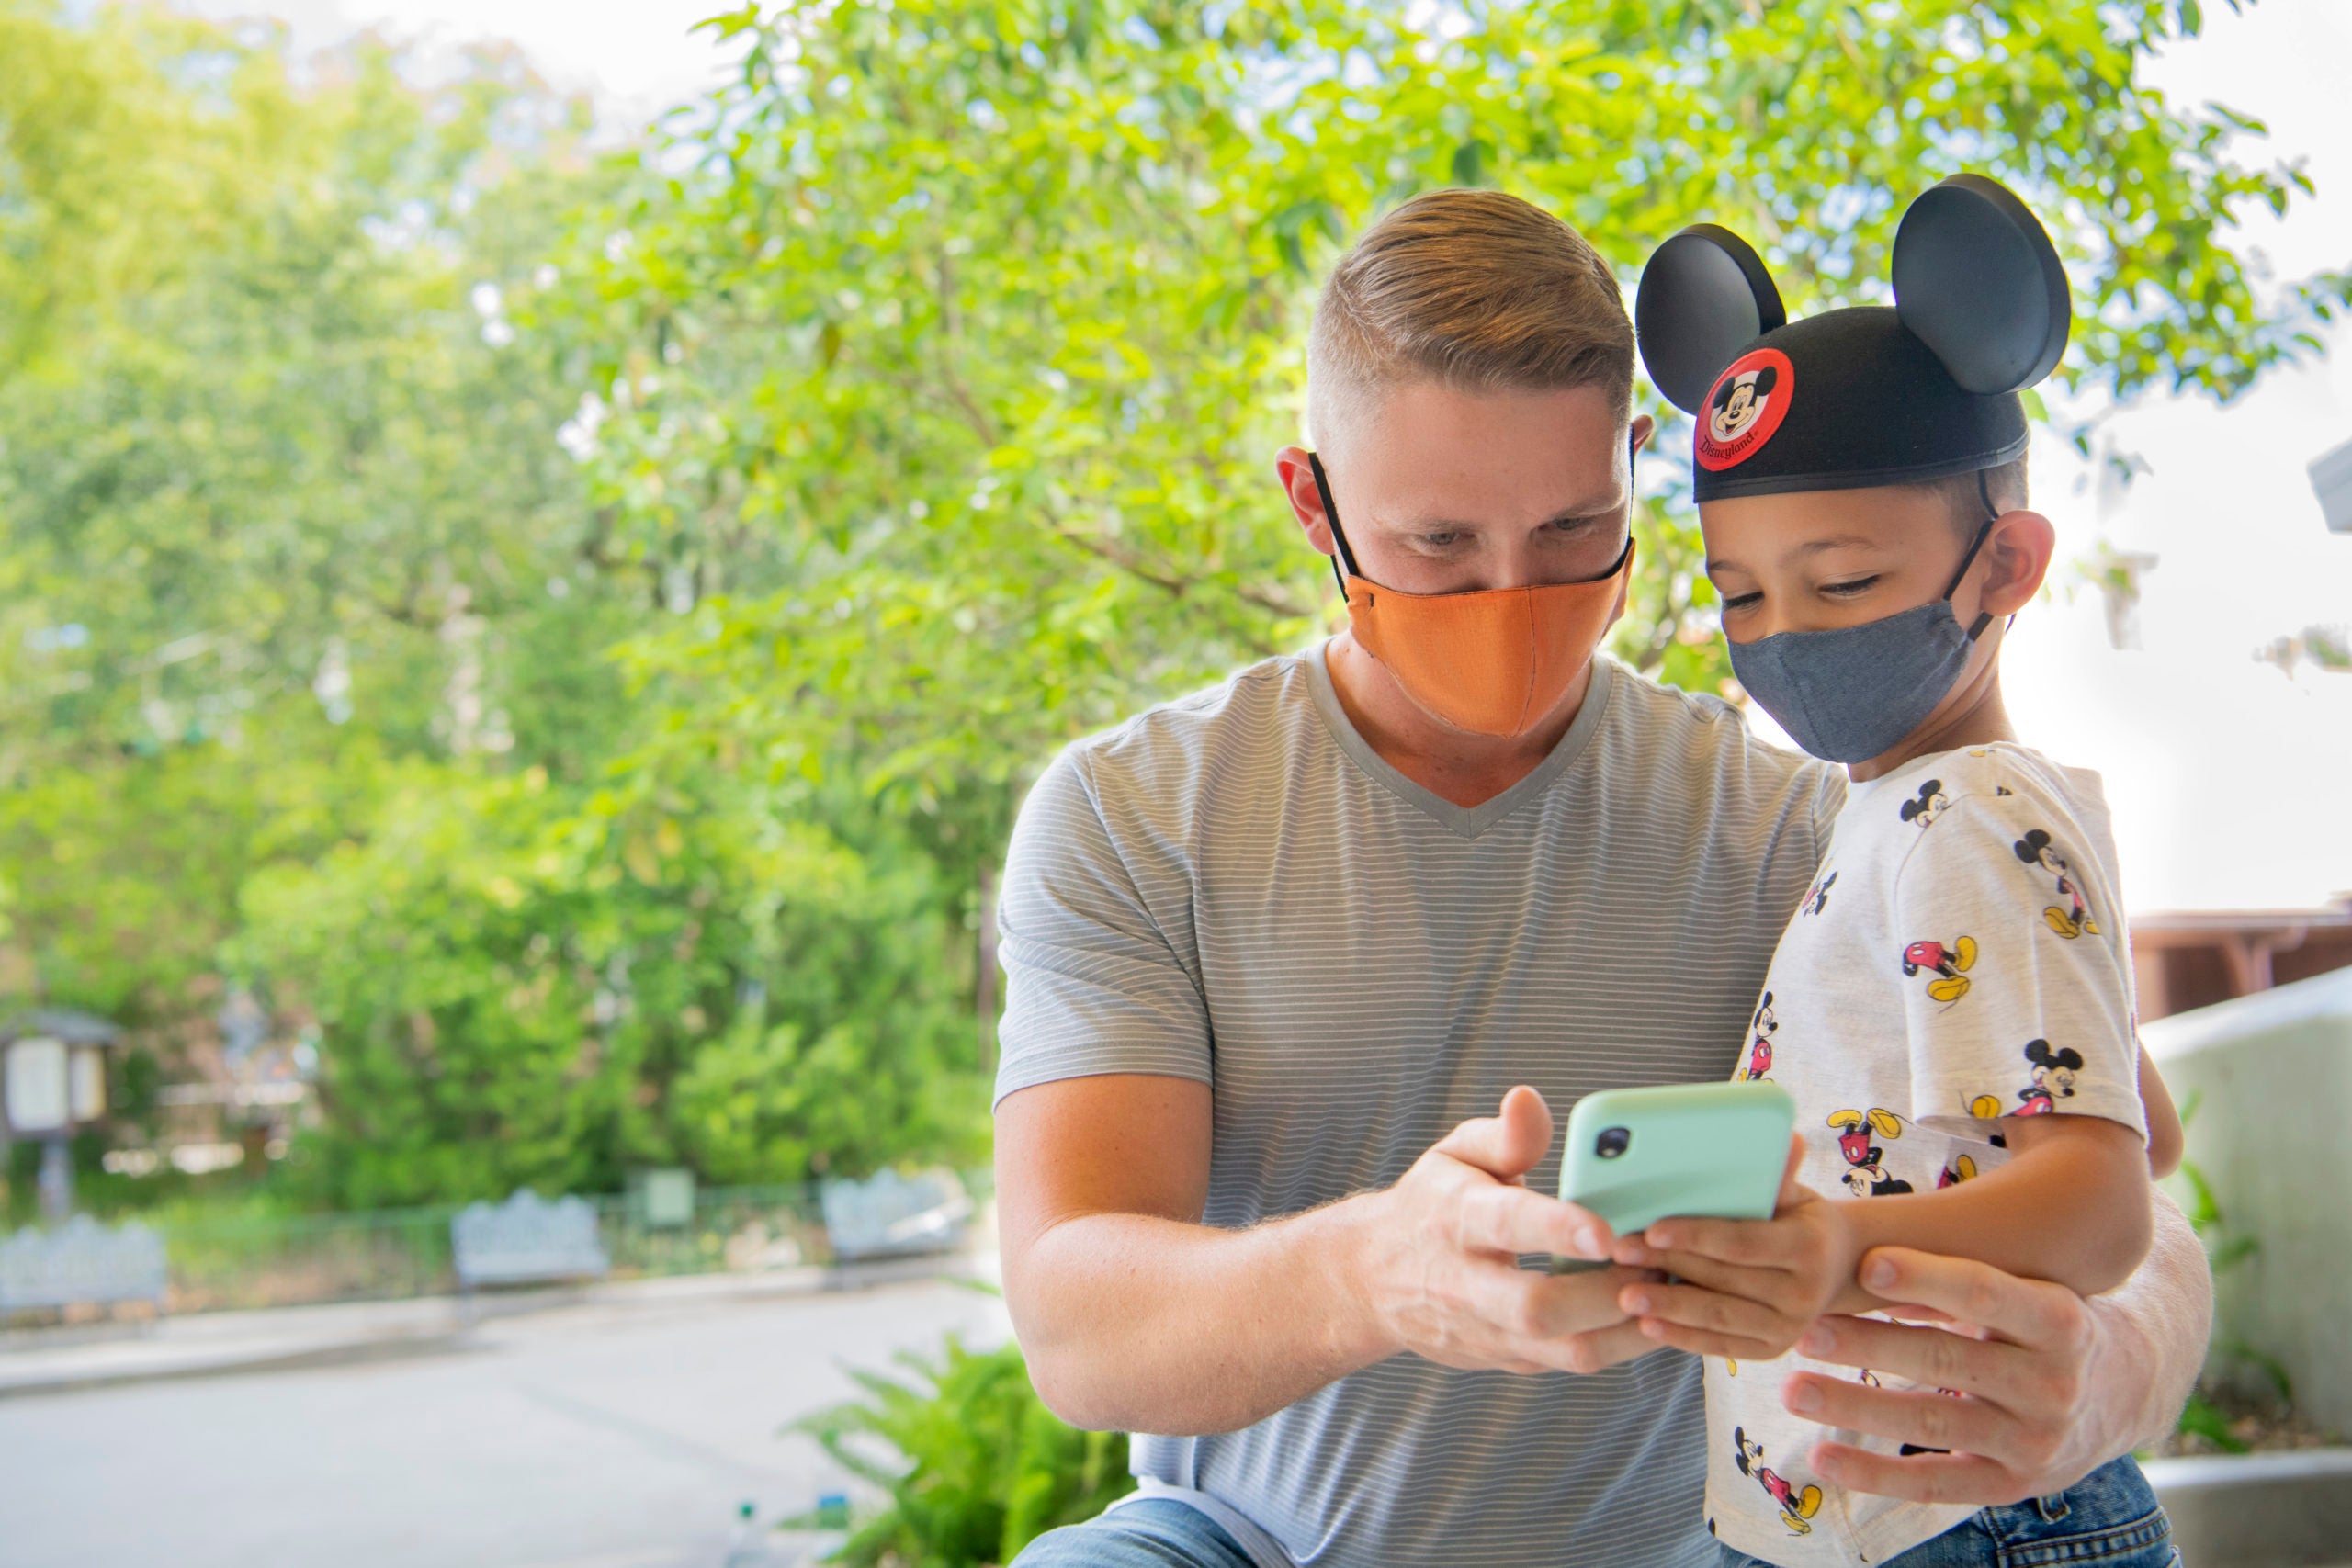 Disneyland App and Digital Technology at Disneyland Resort